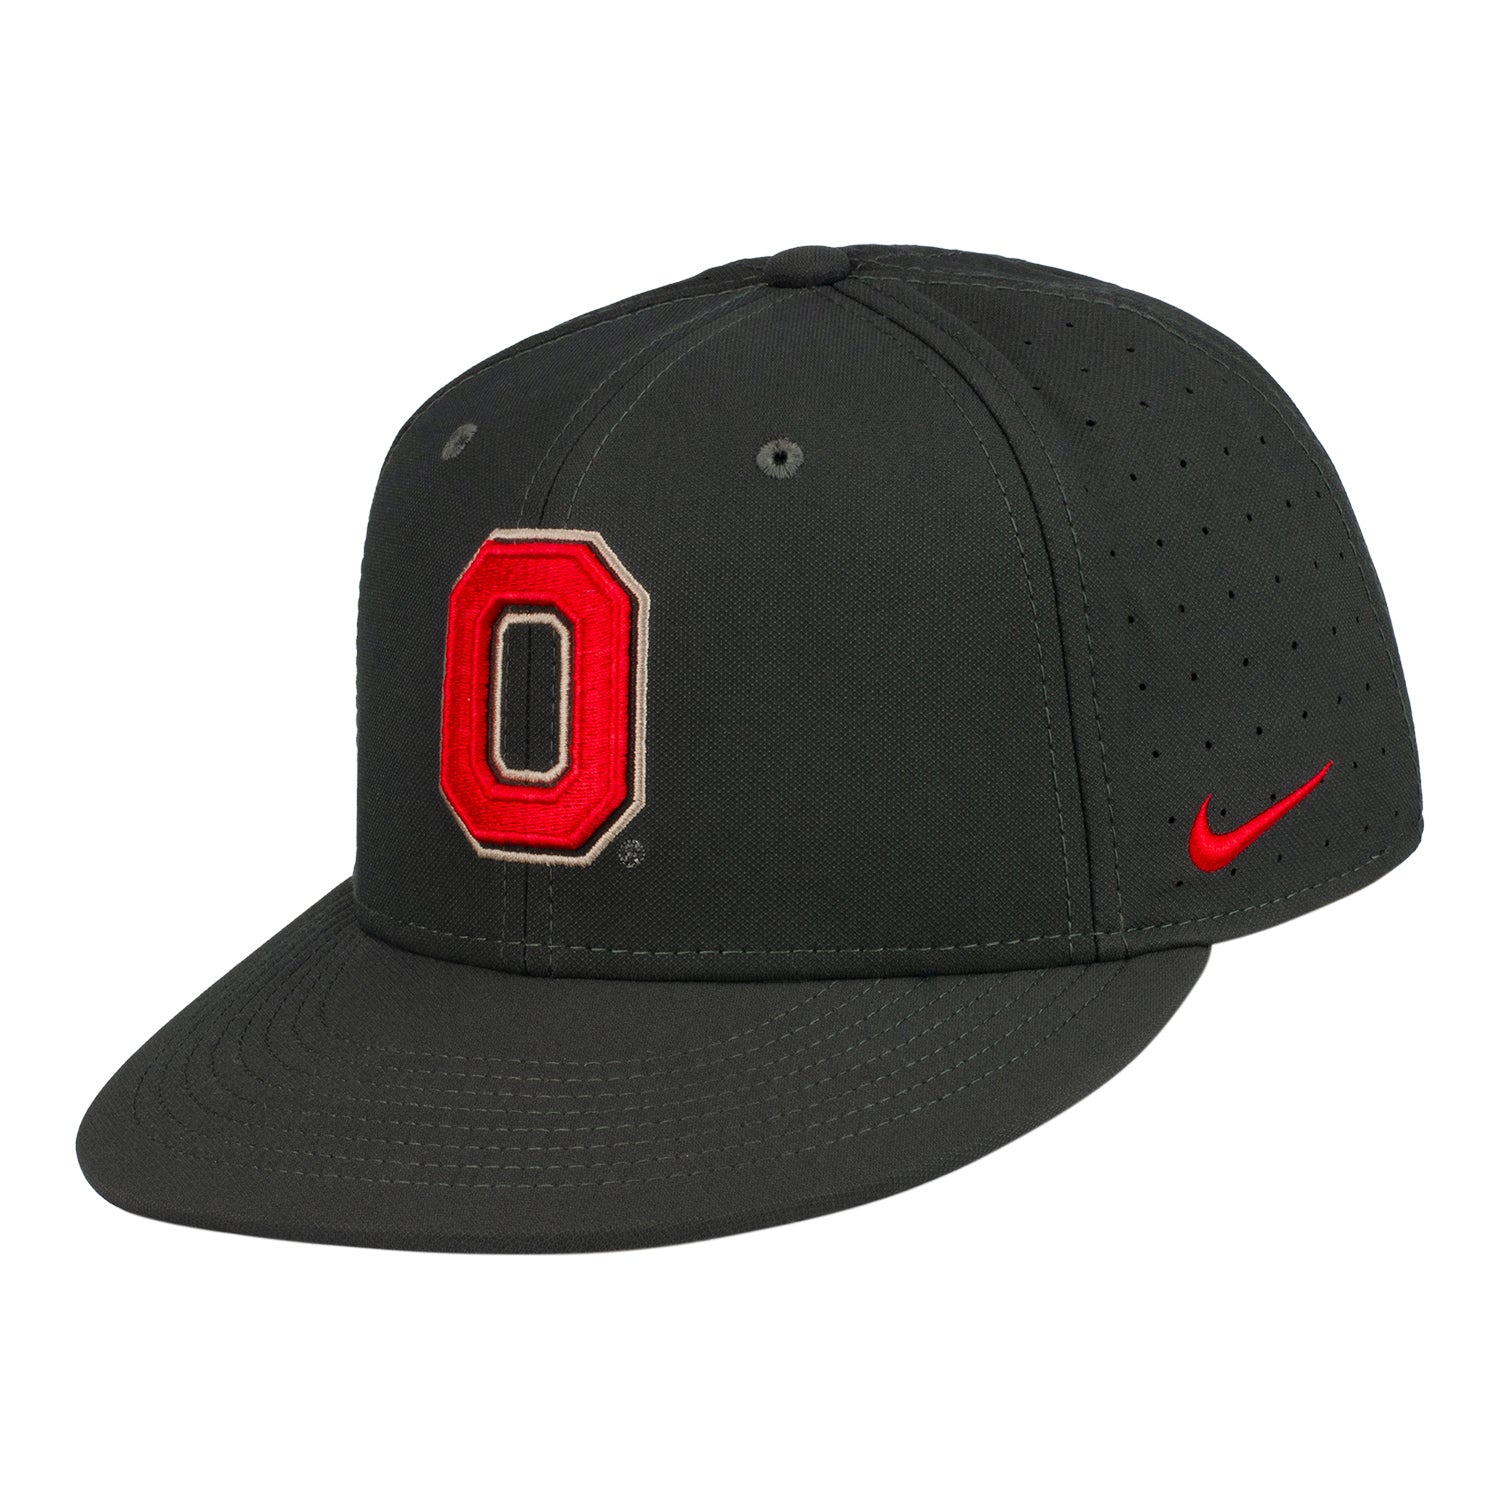 Ohio State Buckeyes Nike Aero Block O Fitted Hat